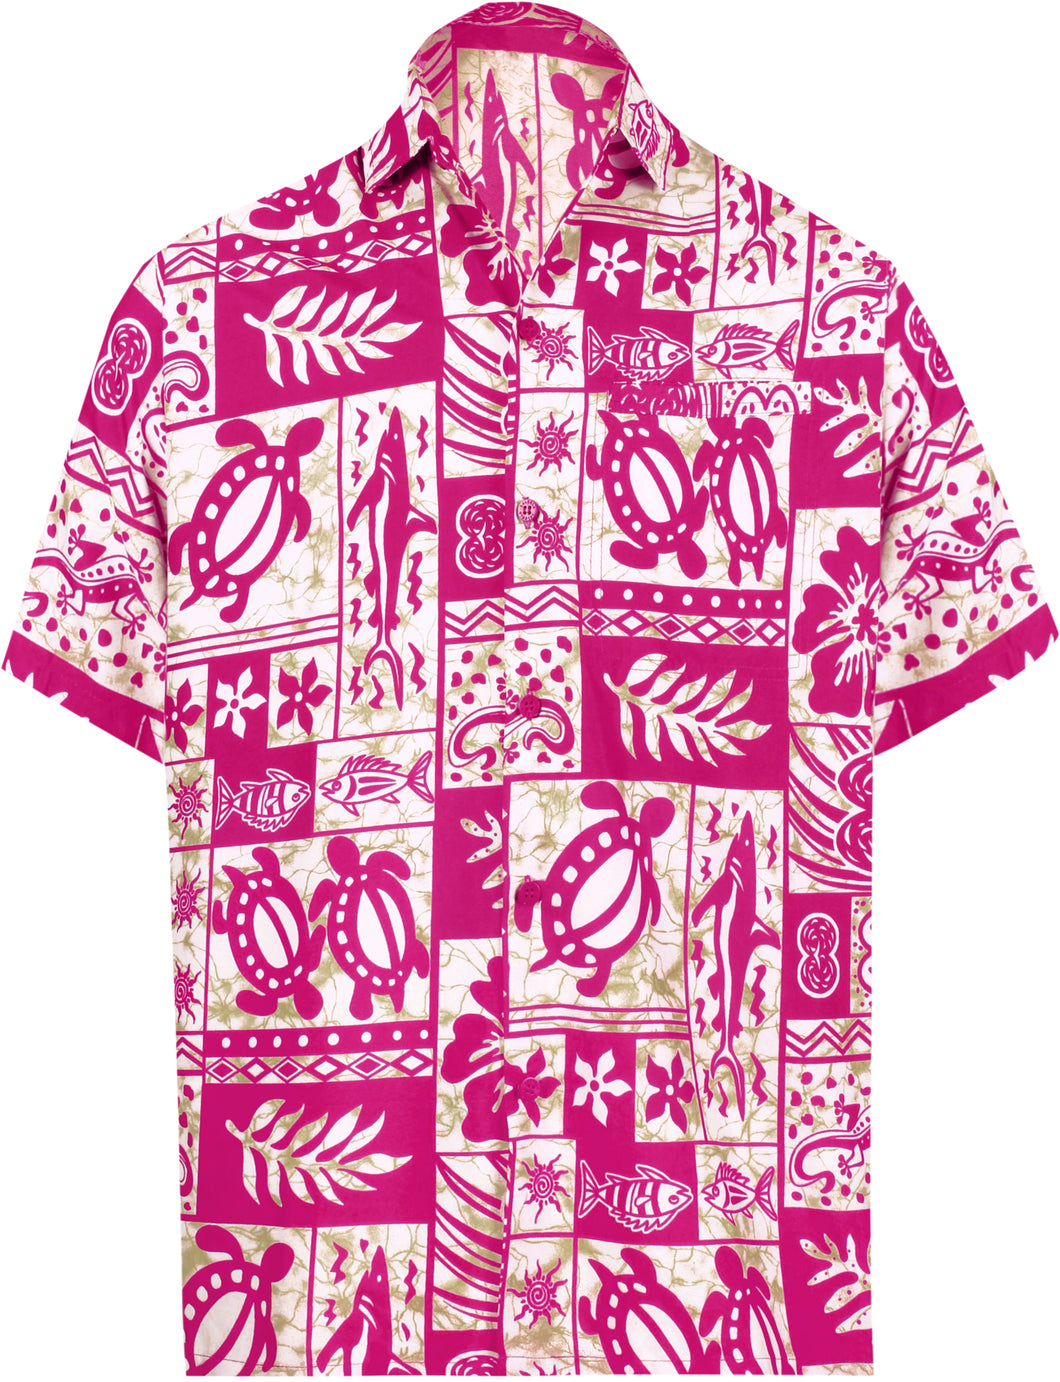 la-leela-support-pink-breast-cancer-shirt-aquatic-life-hawaiian-beach-shirt-for-mens-casual-button-down-tropical-aloha-white_w127